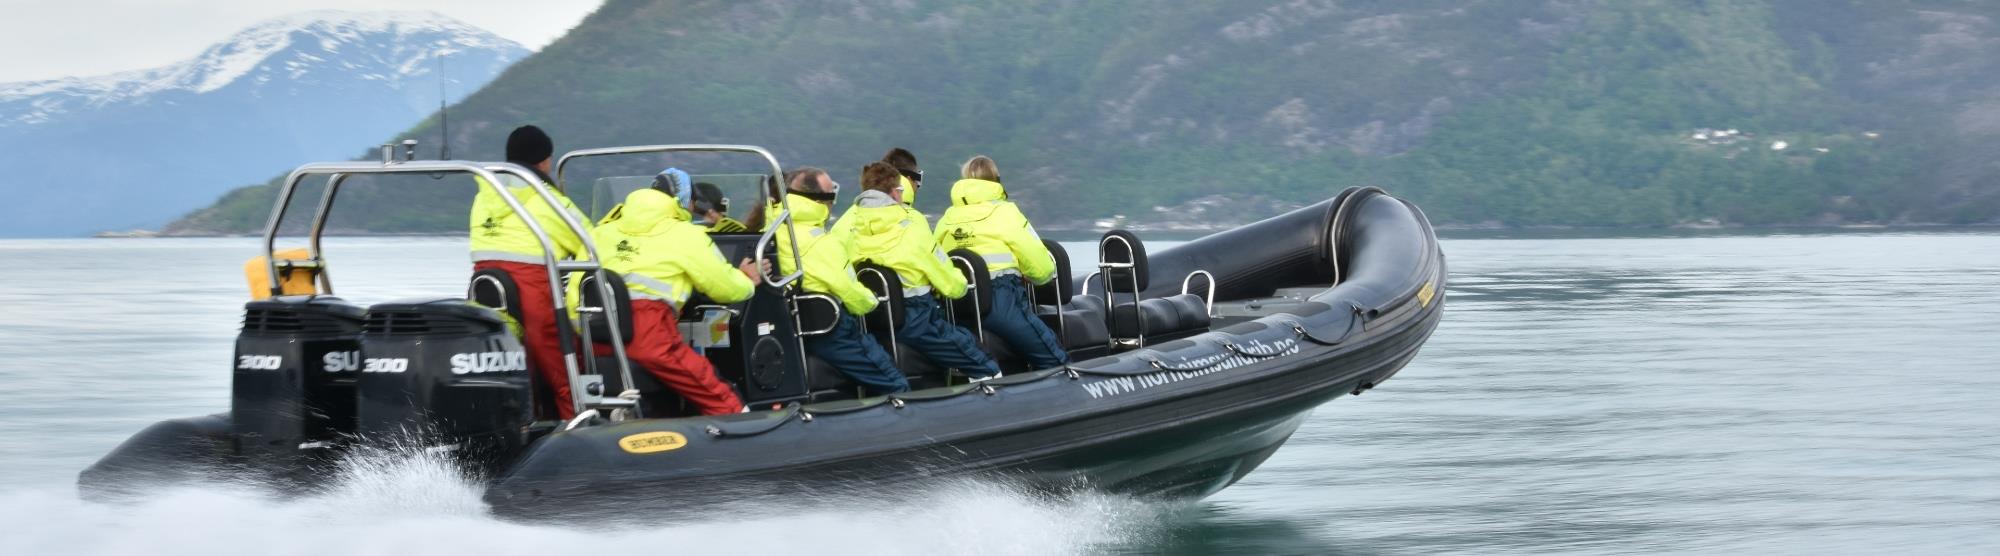 Norgesferie ungdom - Norheimsund RIB Seafari